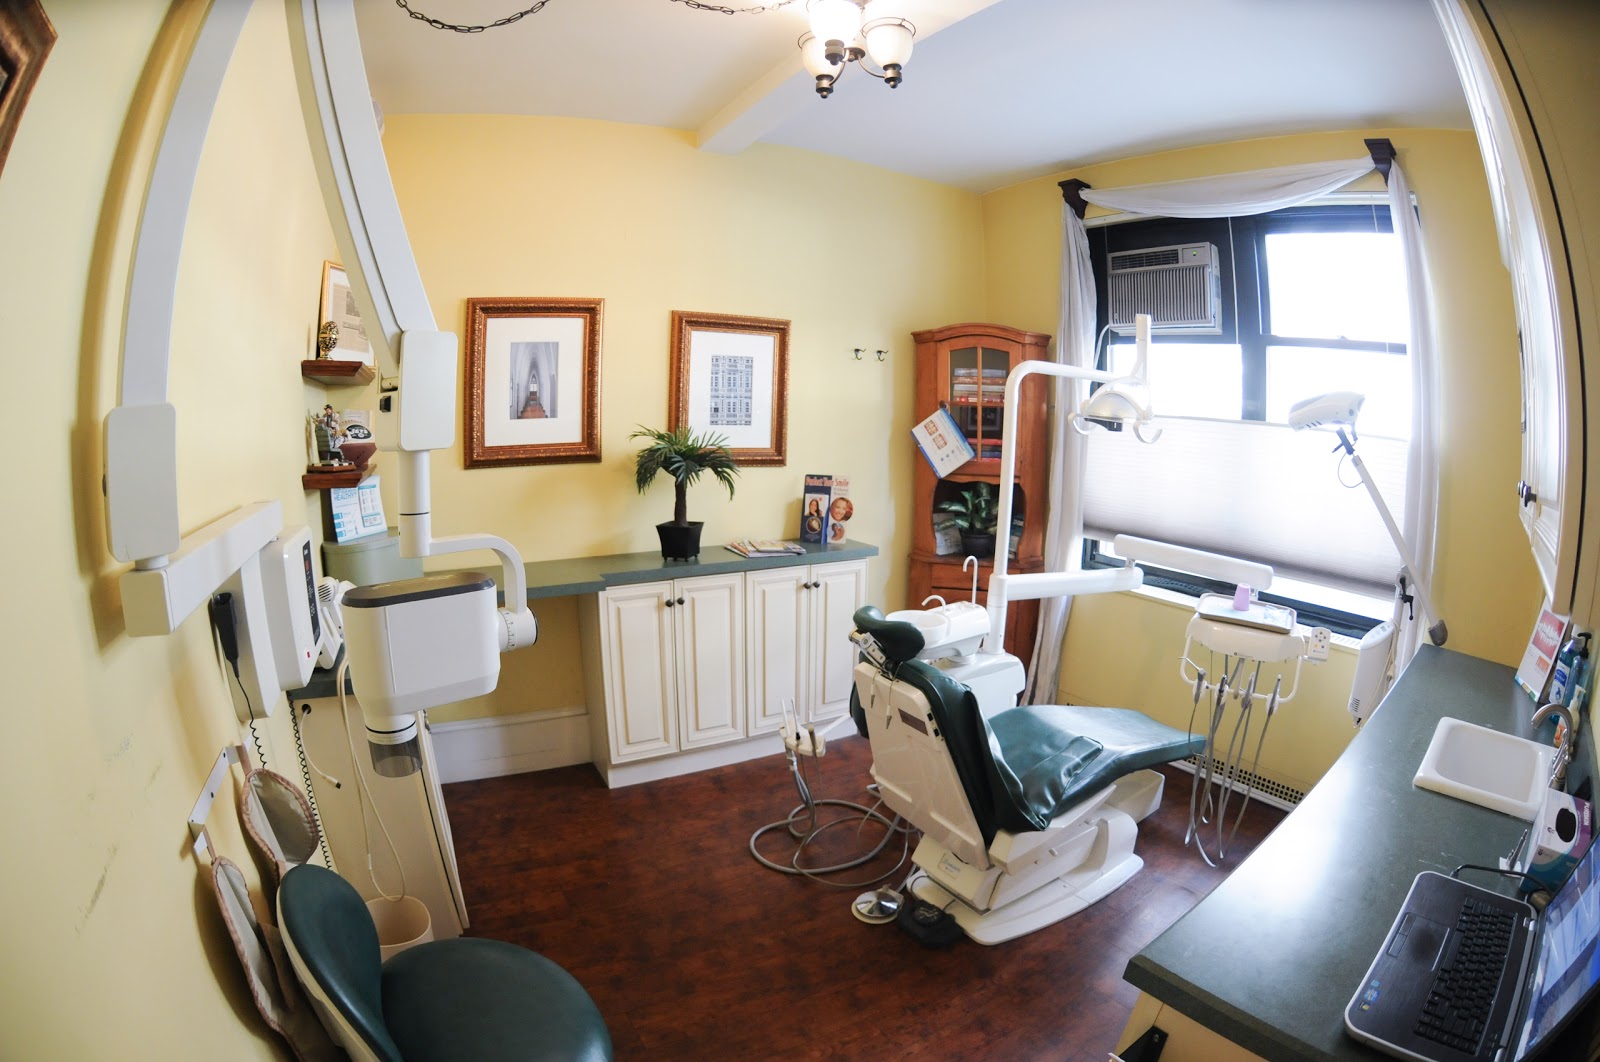 Photo of Shalom Dental NY in New York City, New York, United States - 2 Picture of Point of interest, Establishment, Health, Dentist